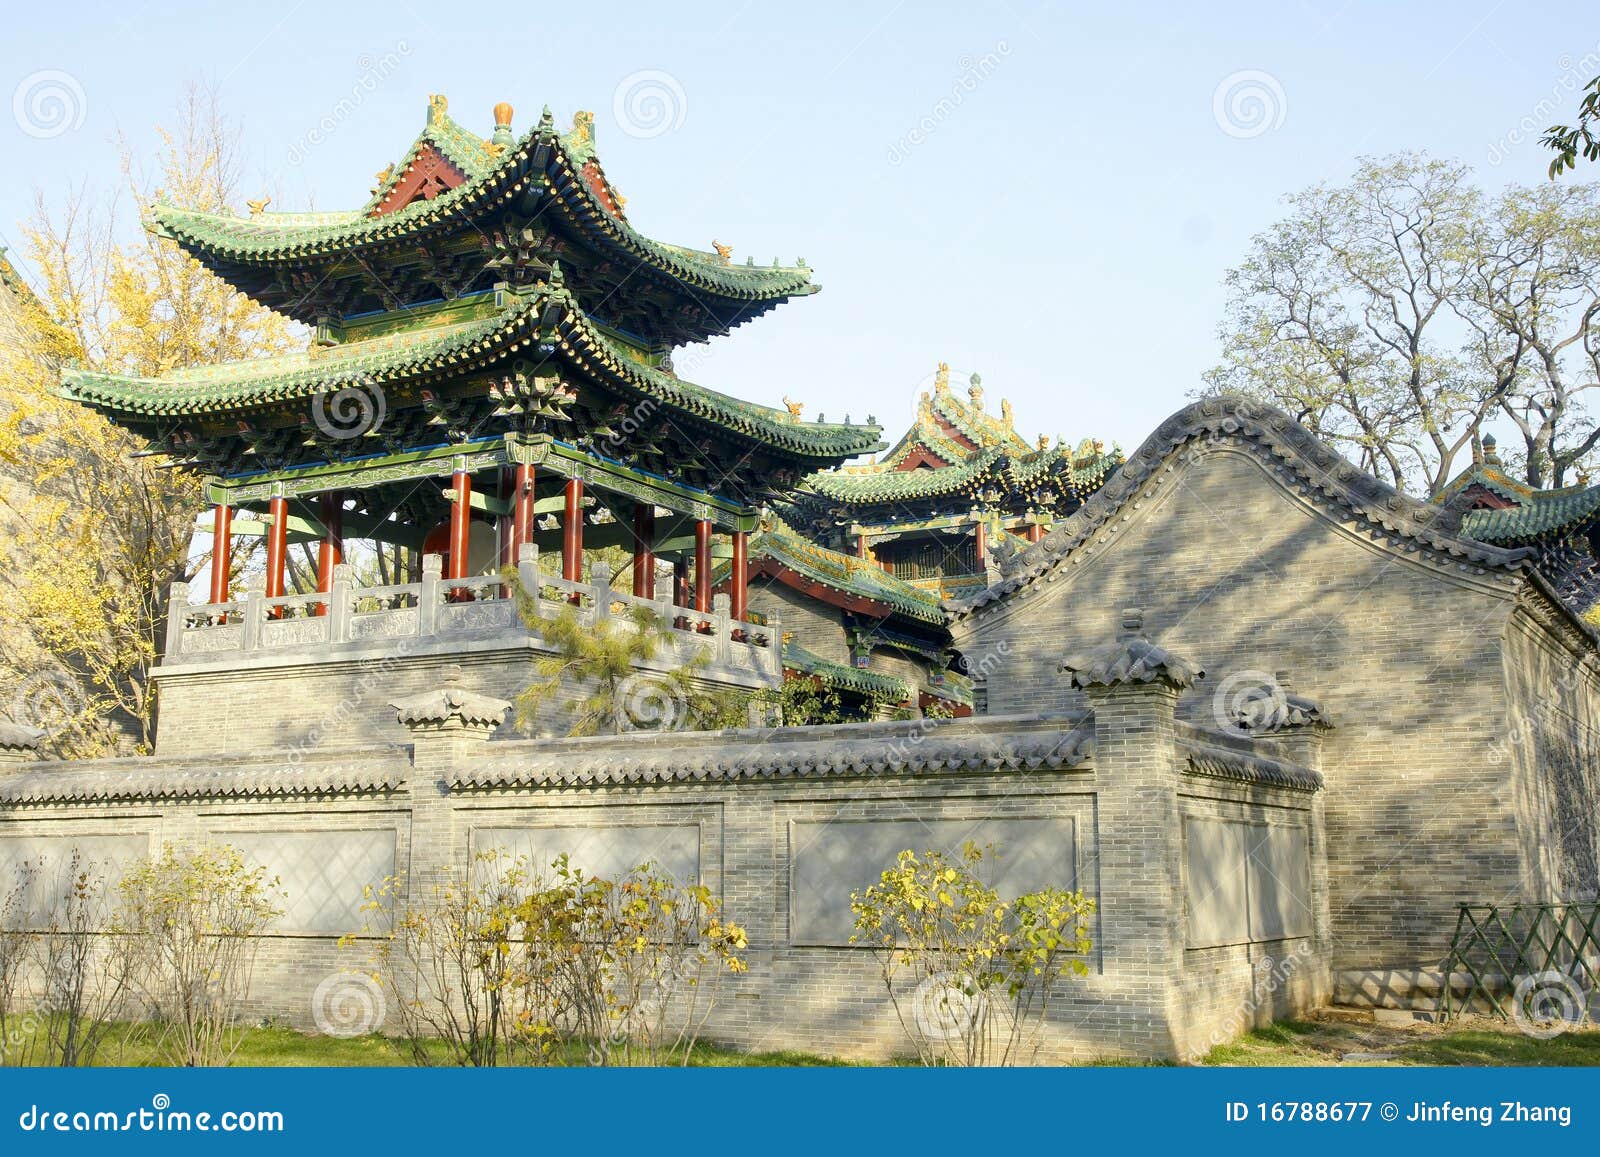 Chinese buildings stock image. Image of buildings, garret ...